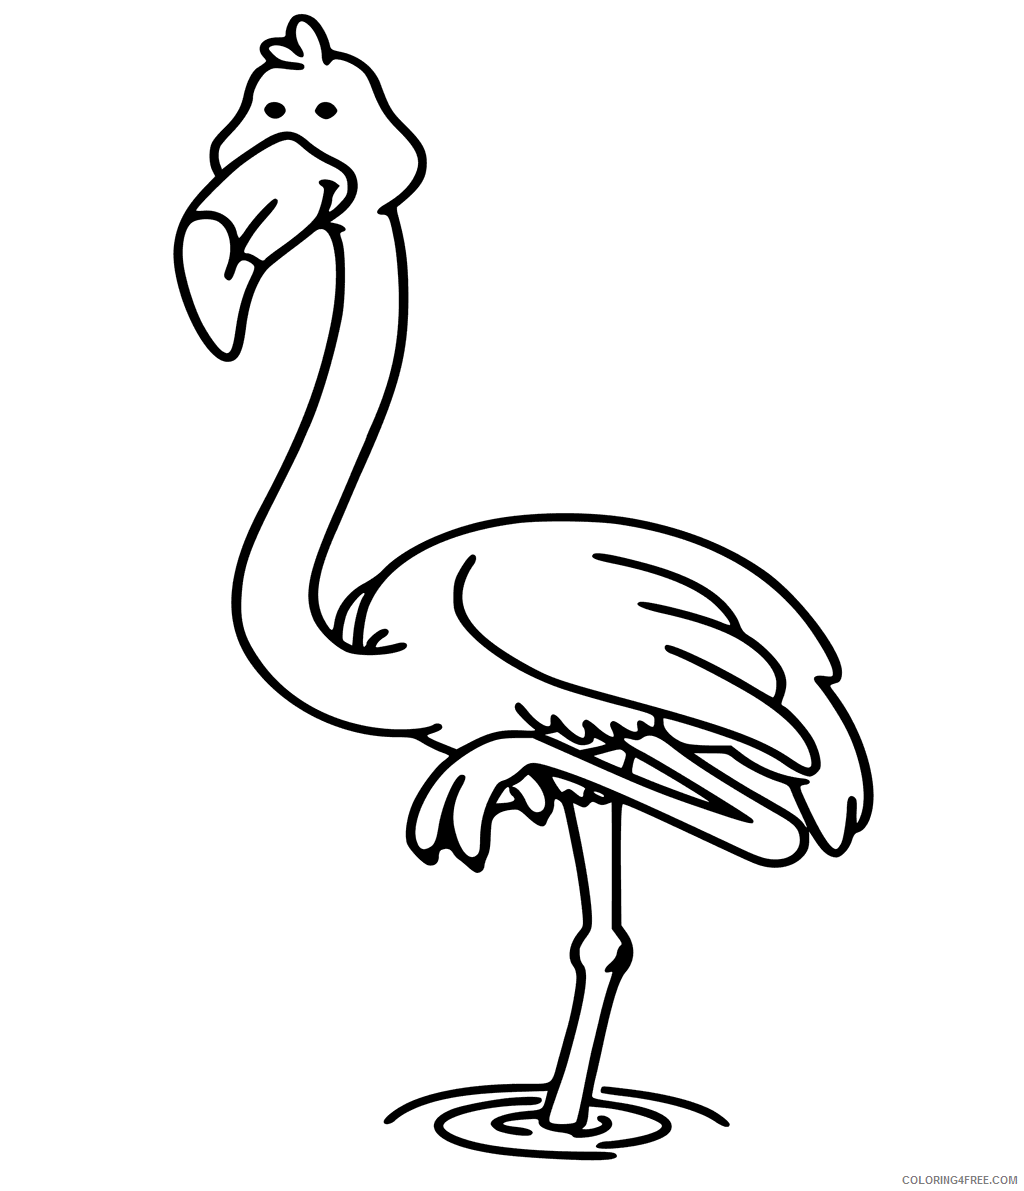 Flamingos Coloring Pages Animal Printable Sheets Cartoon Flamingo For Kids 21 Coloring4free Coloring4free Com